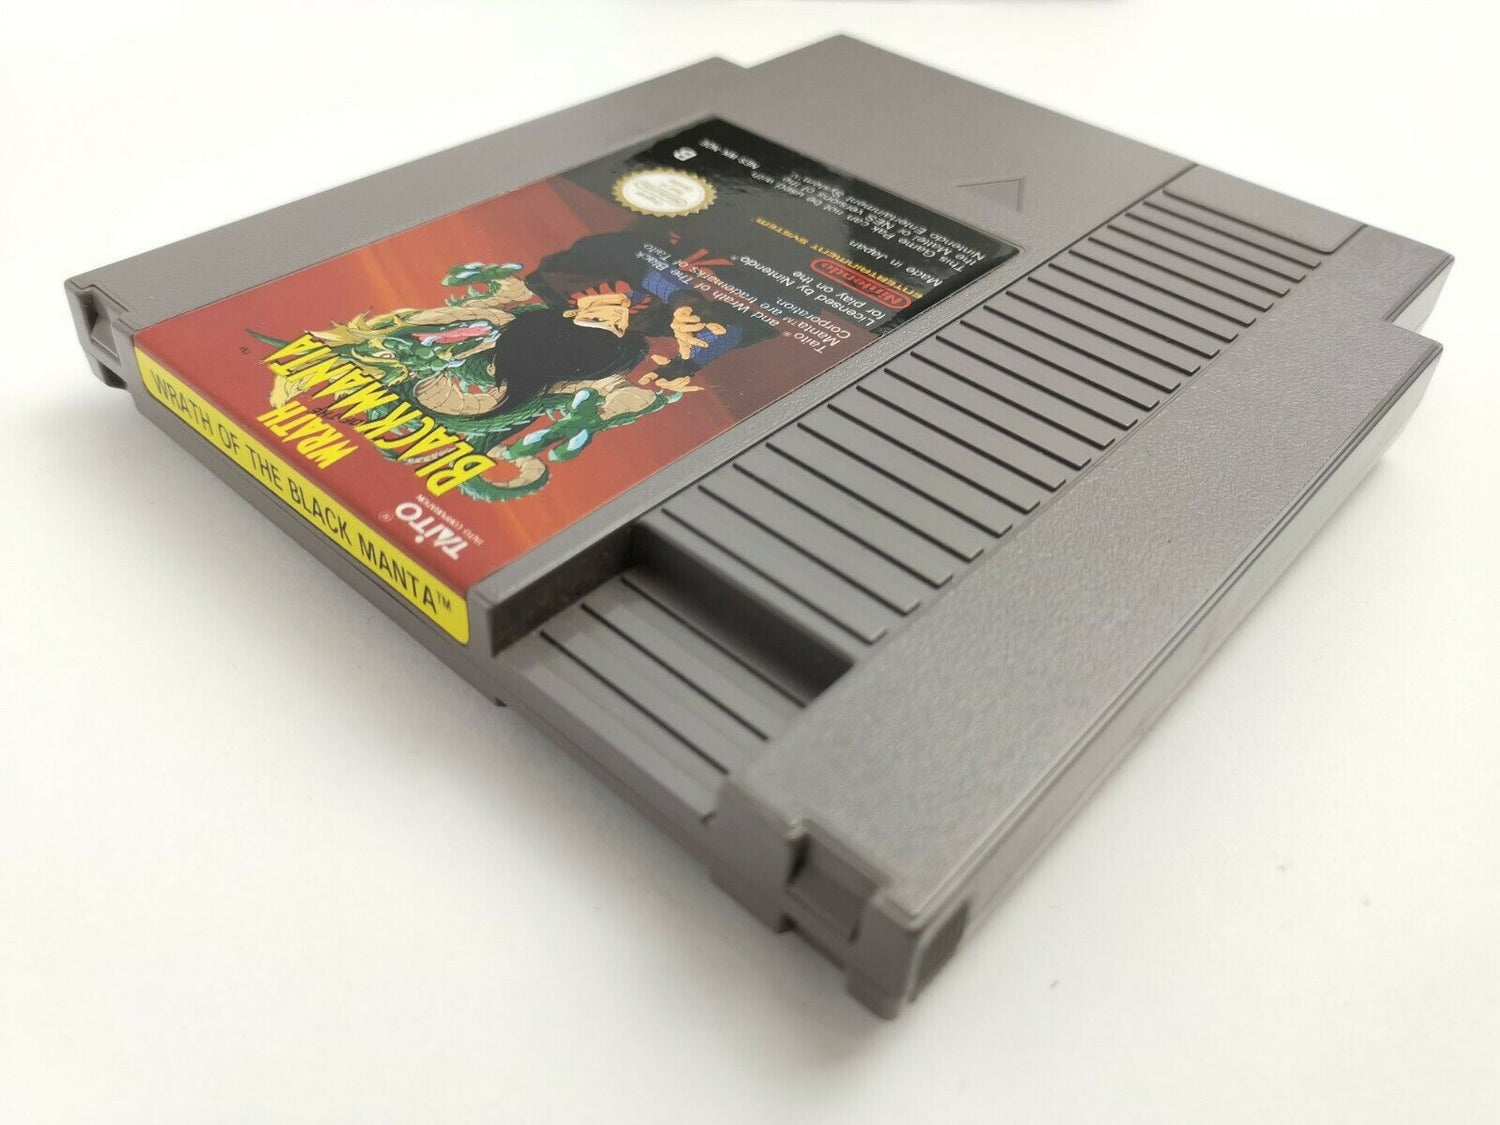 Nintendo Entertainment System Game 